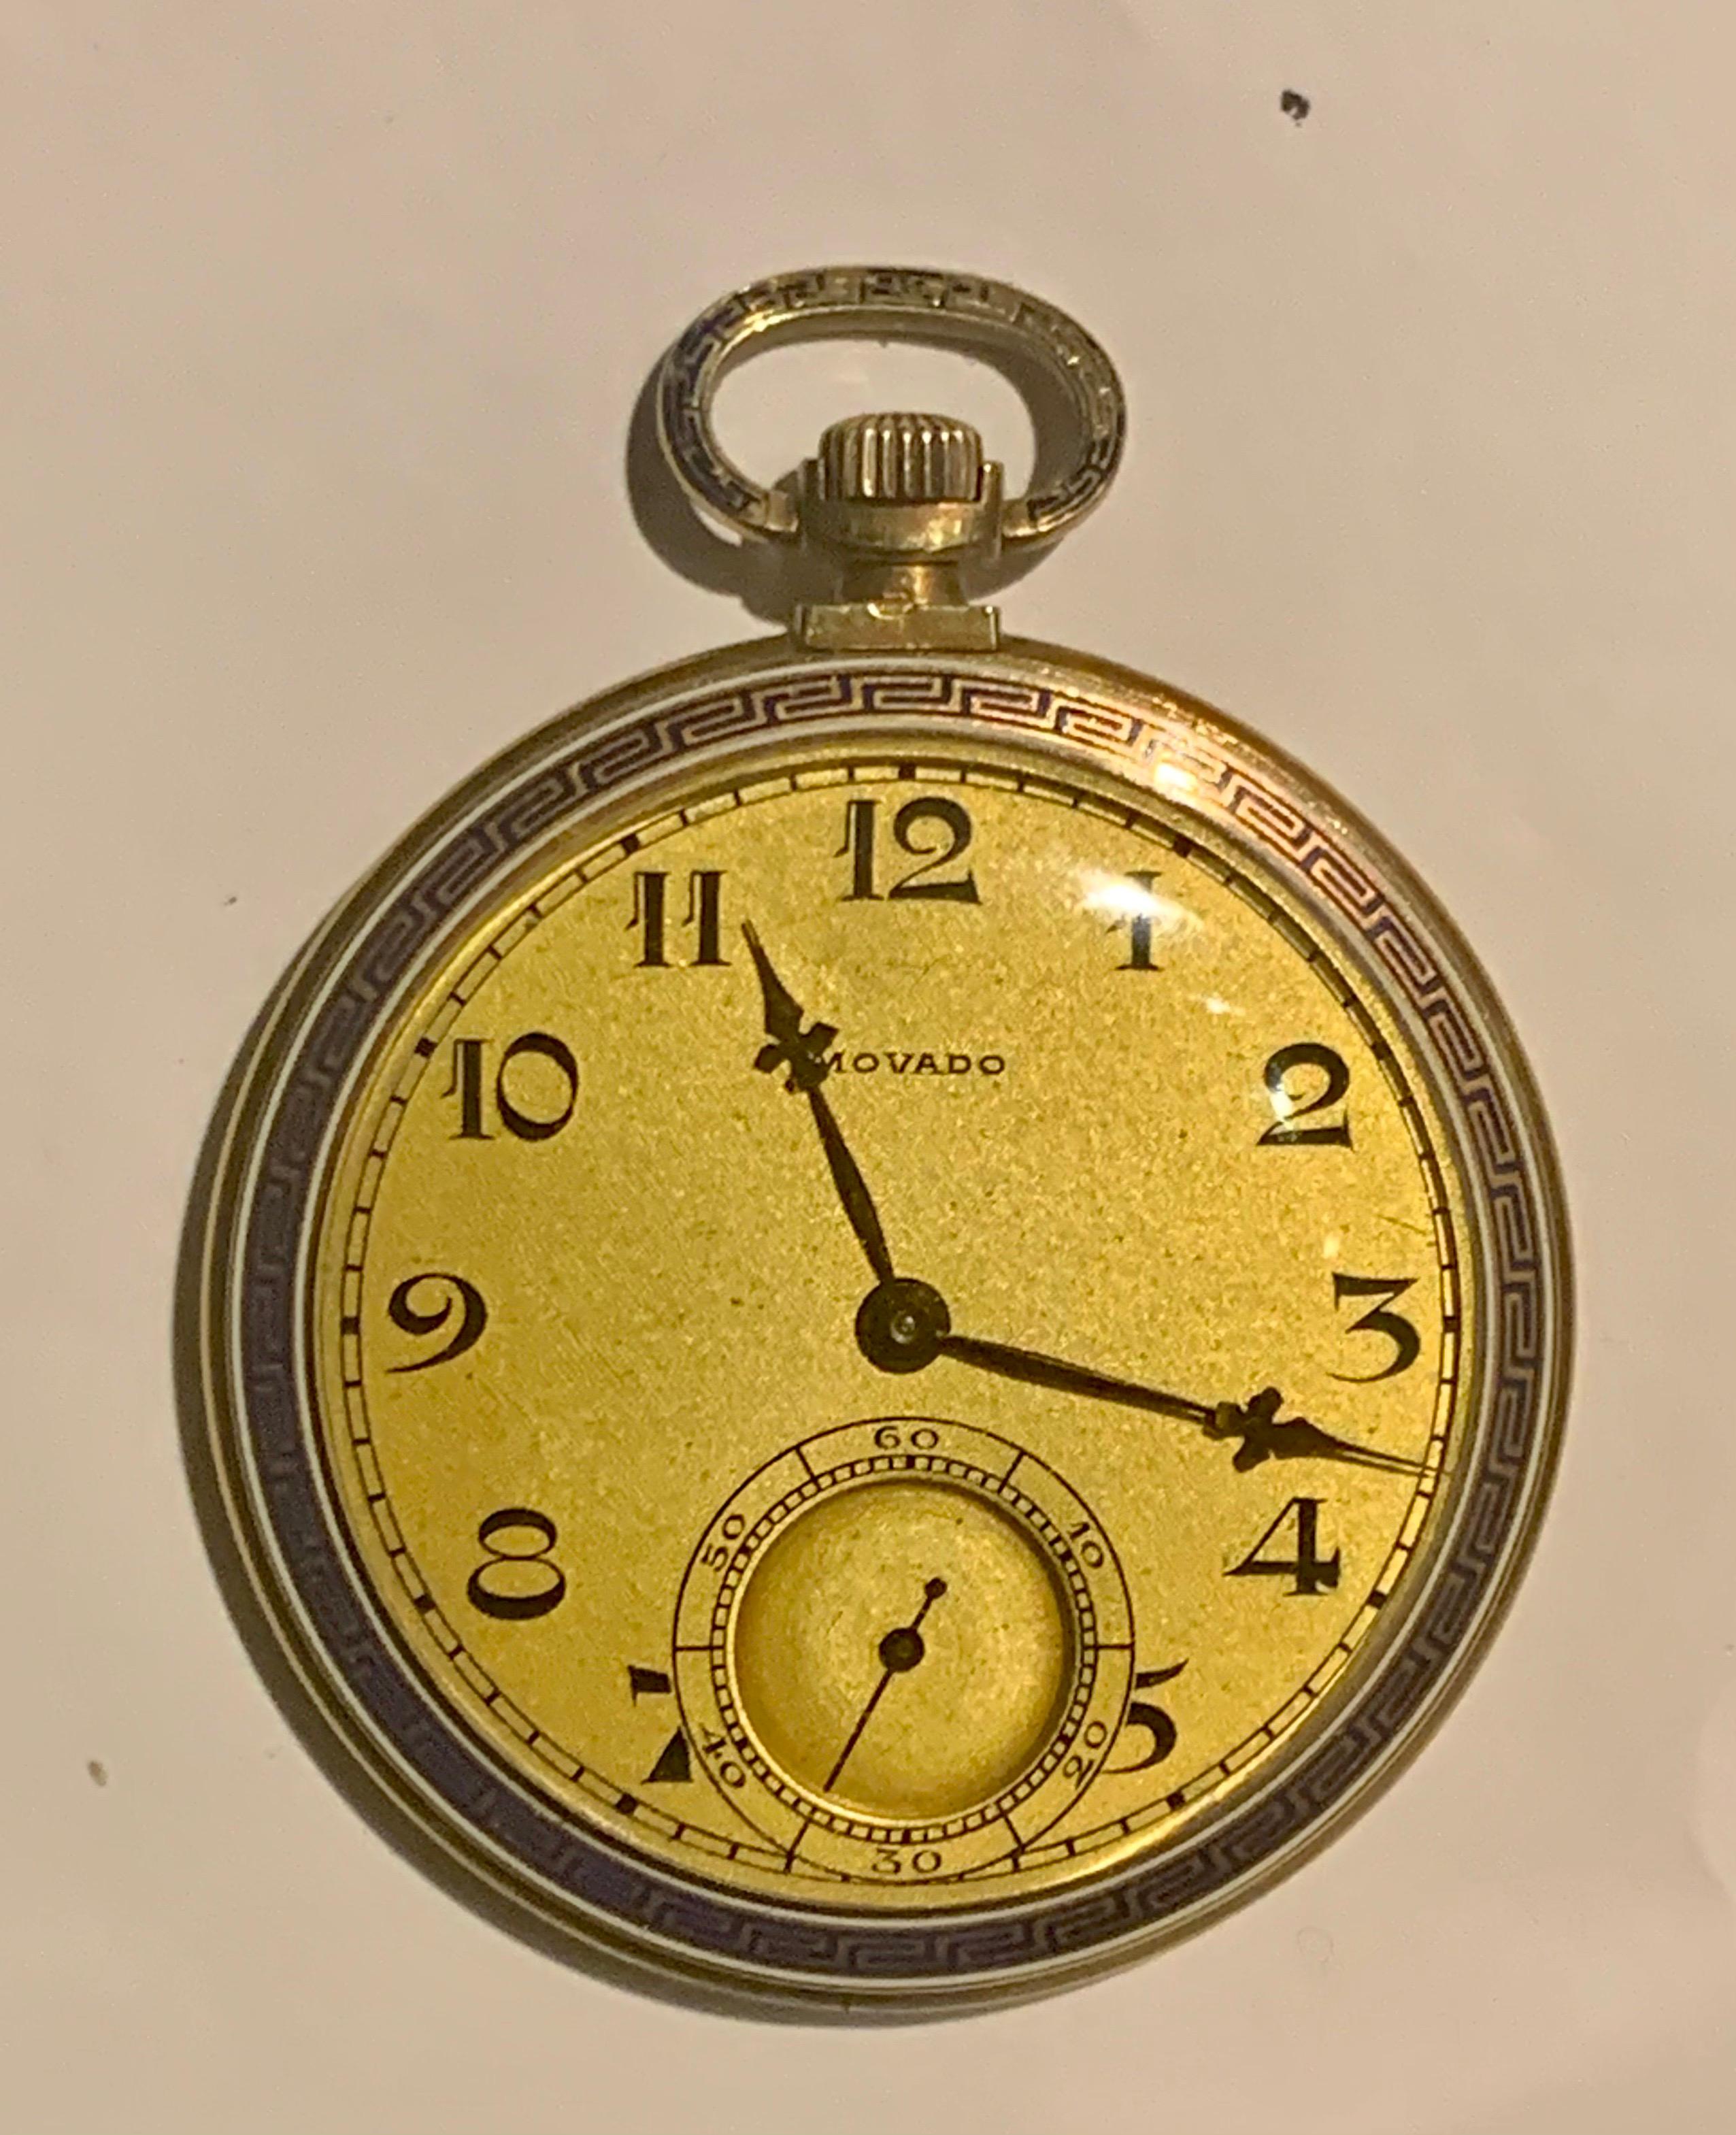 Superb 14k Yellow Gold & Enamel Art Deco Pocket Watch by Movado 3